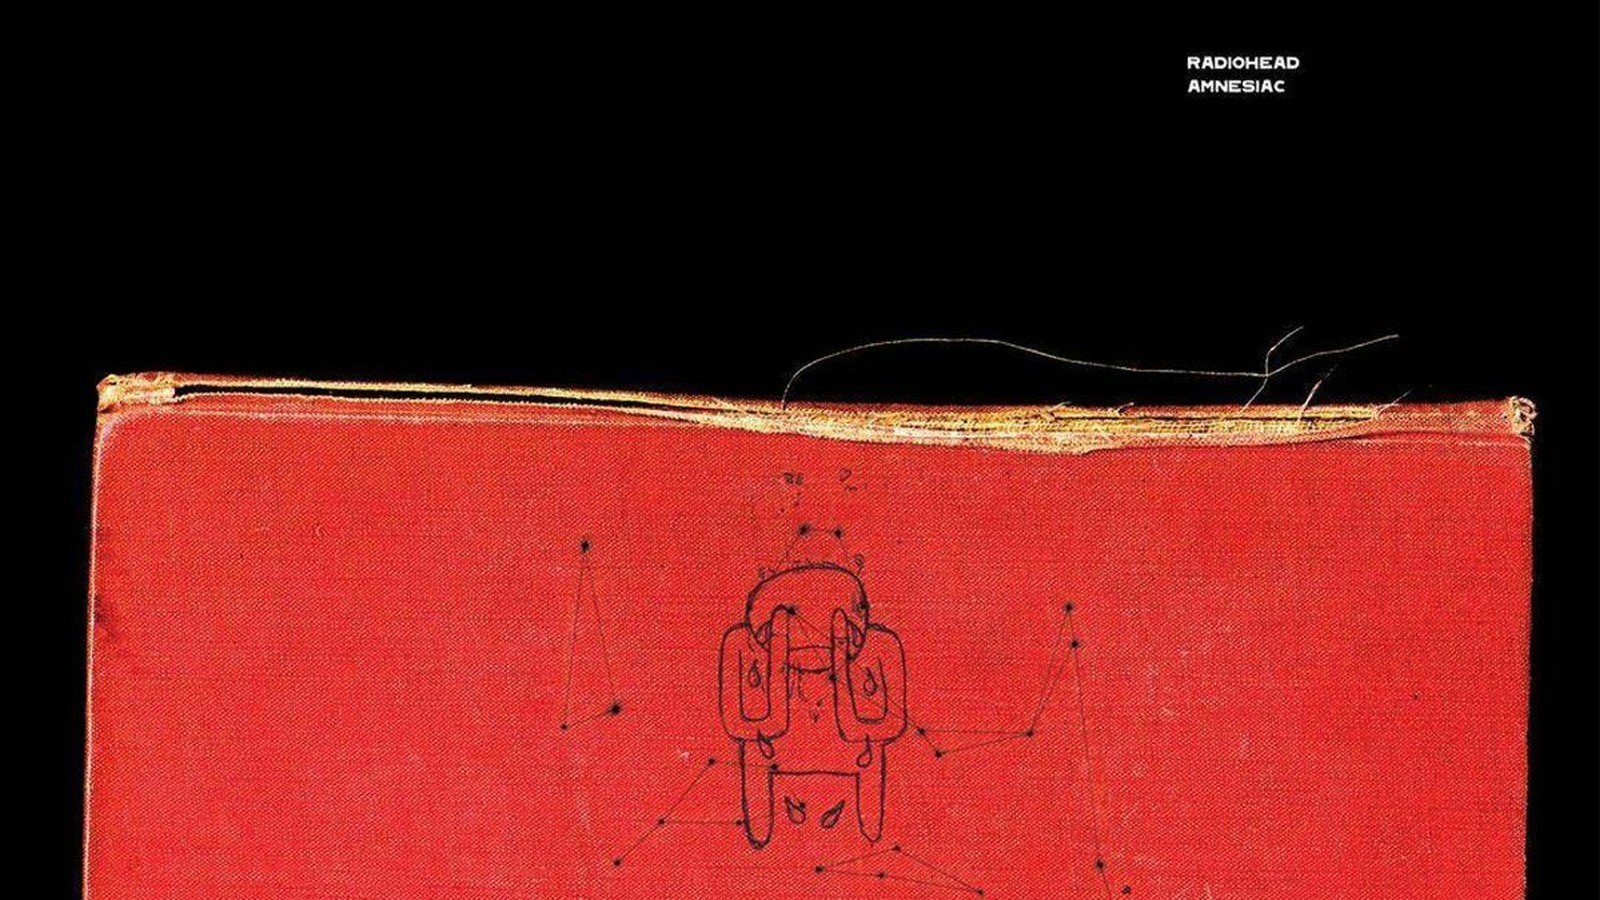 Radiohead's 'Amnesiac' May Be Its Best Album - The Atlantic